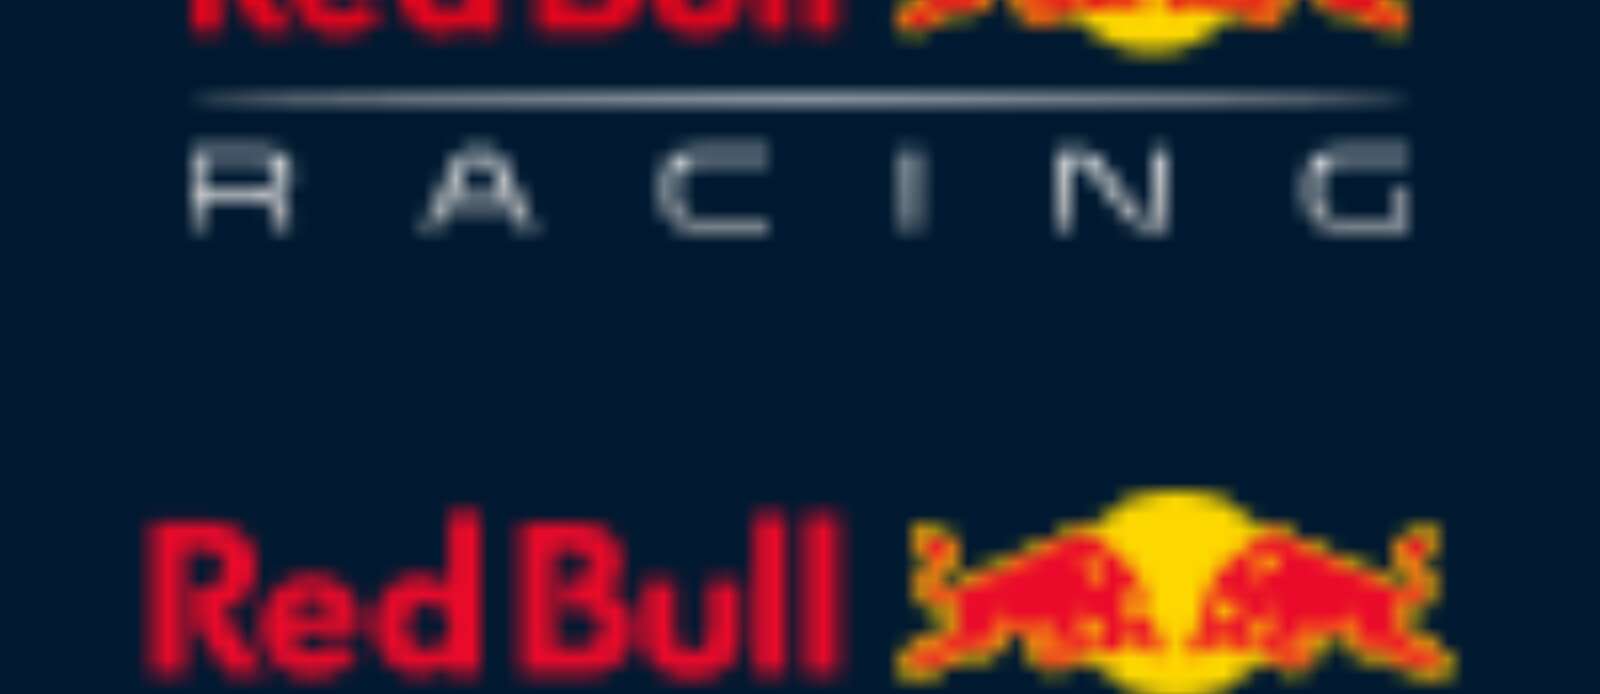 Red Bull Engineering Academy Header Image.